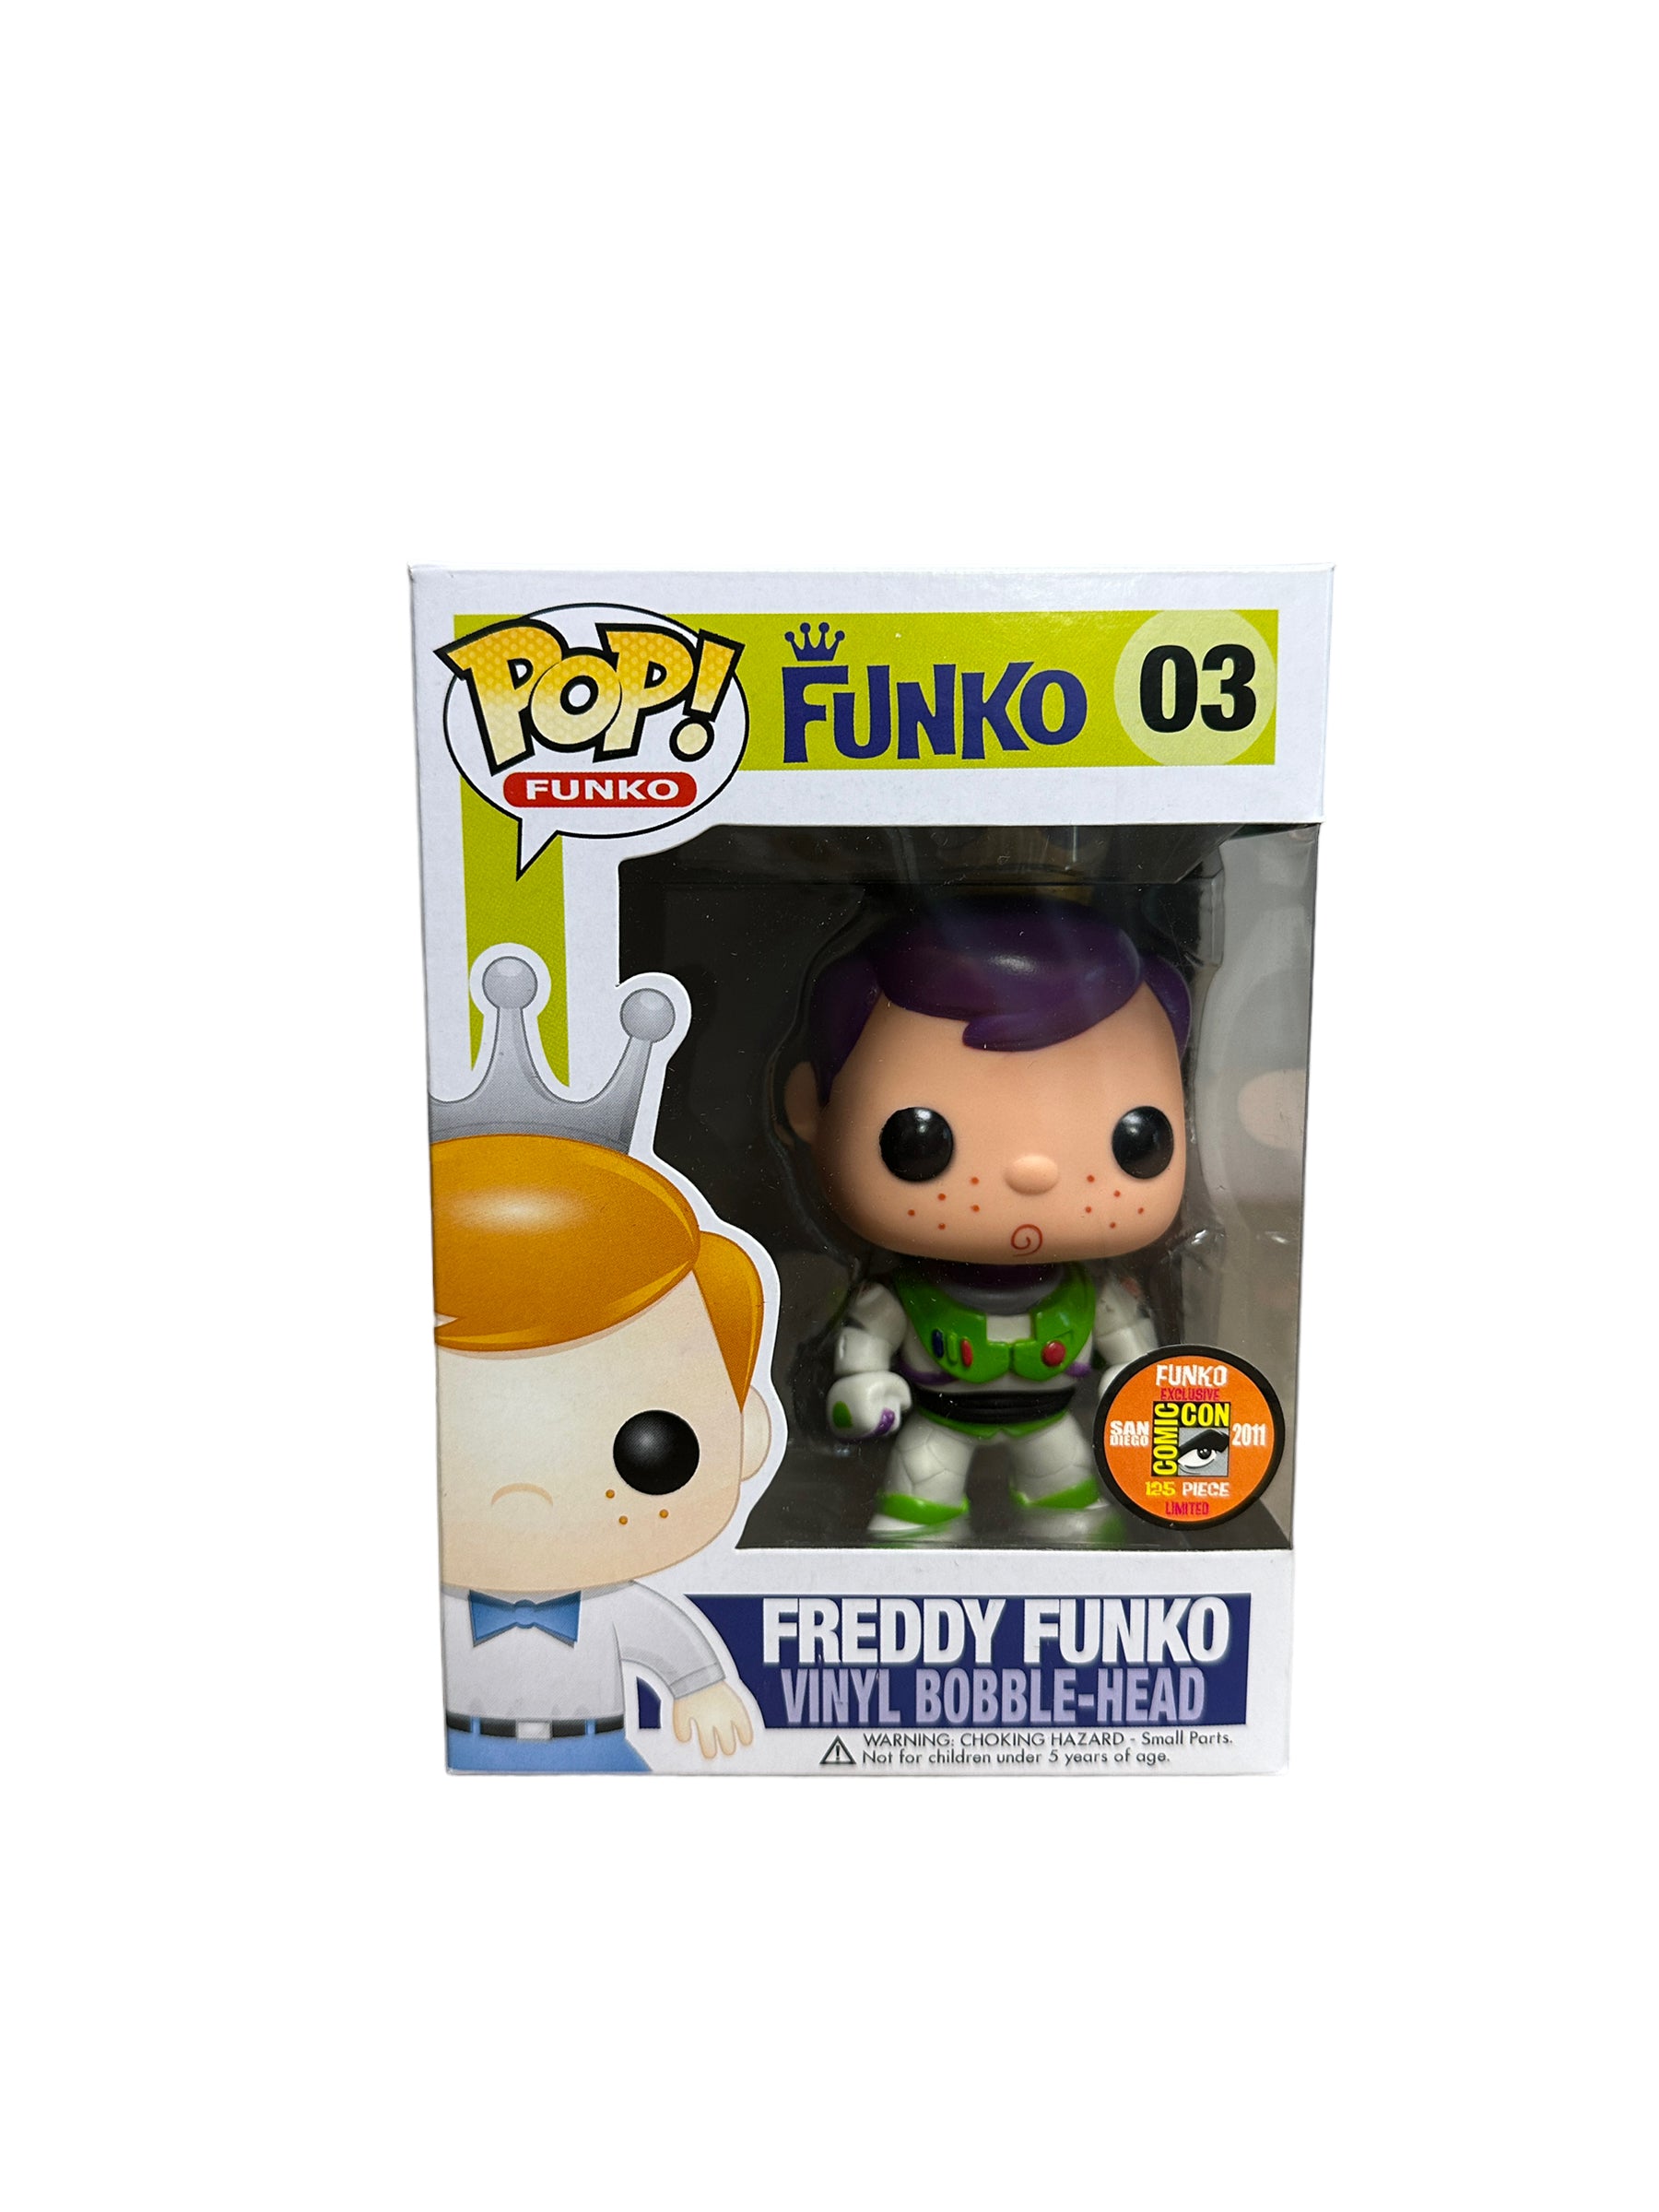 Freddy Funko as Buzz Lightyear #03 Funko Pop! - SDCC 2011 Exclusive LE125 Pcs - Condition 7.5/10